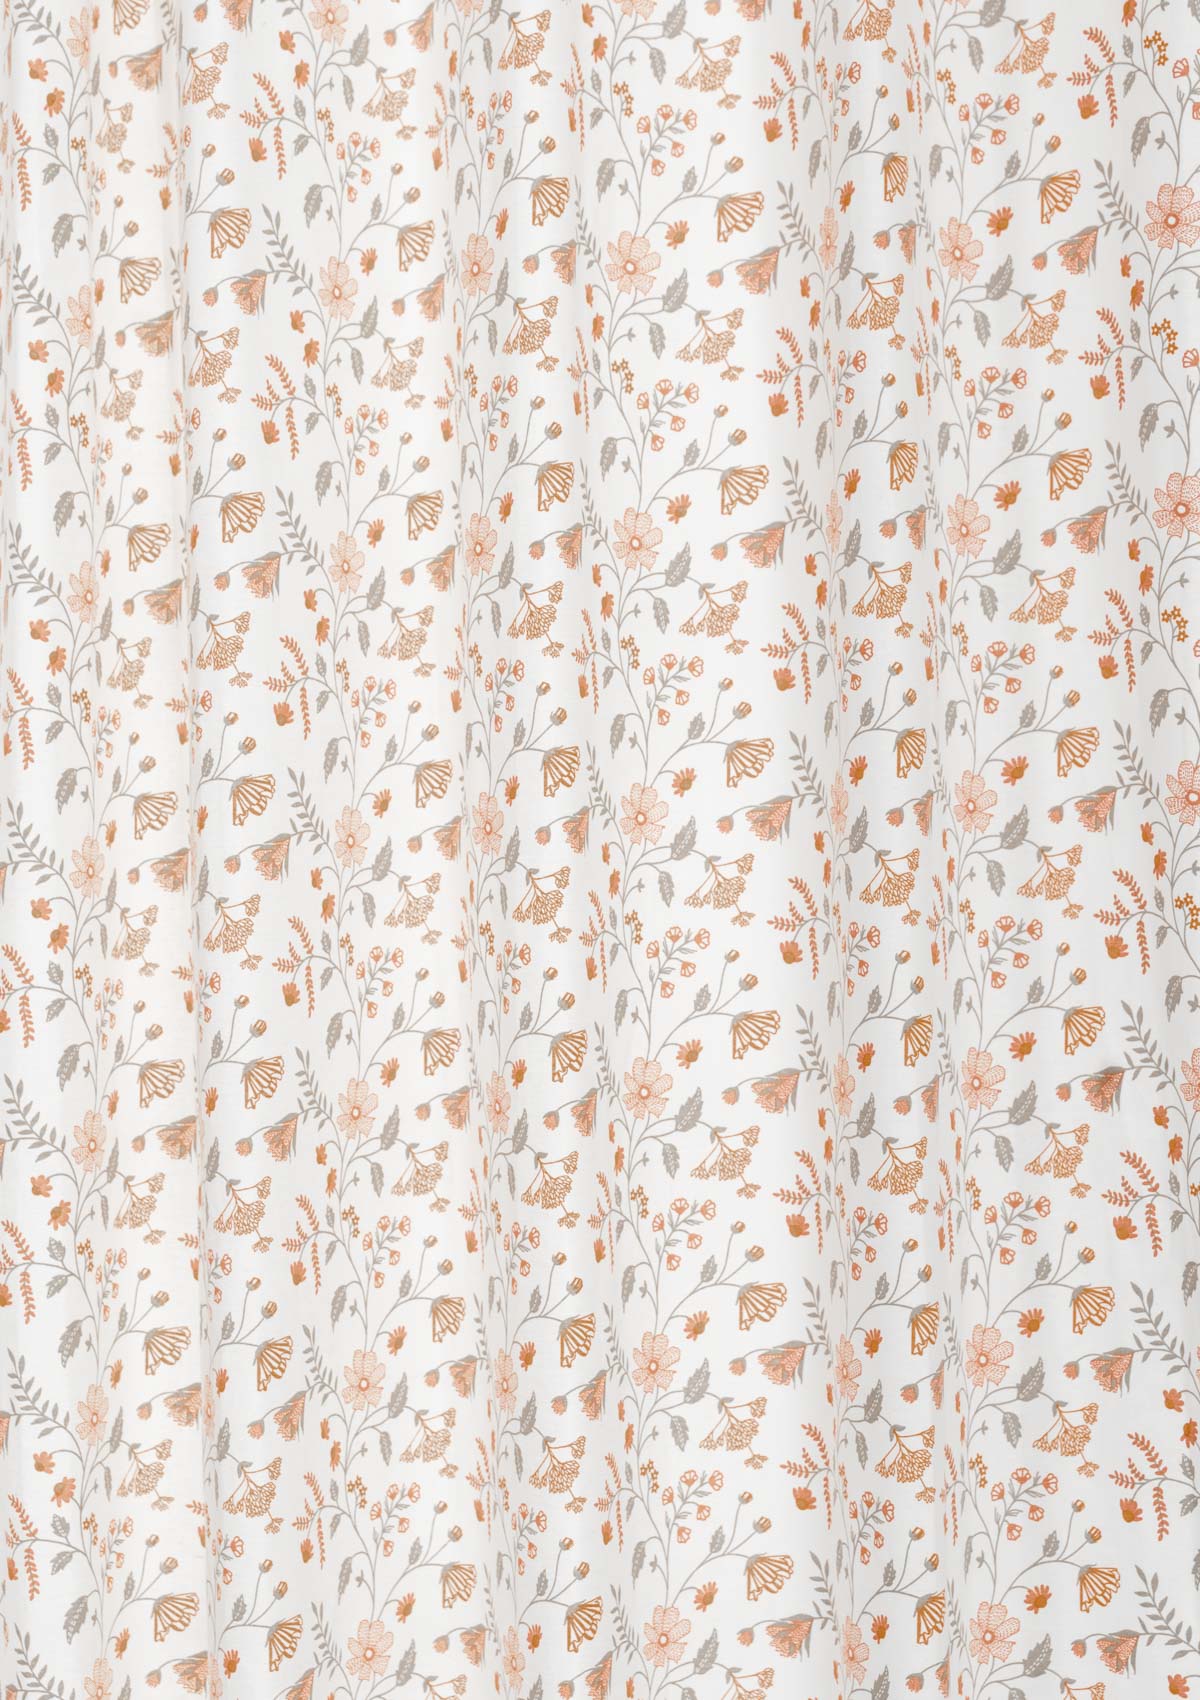 Forest bloom 100% cotton floral curtain for living room - Room darkening - Orange - Pack of 1